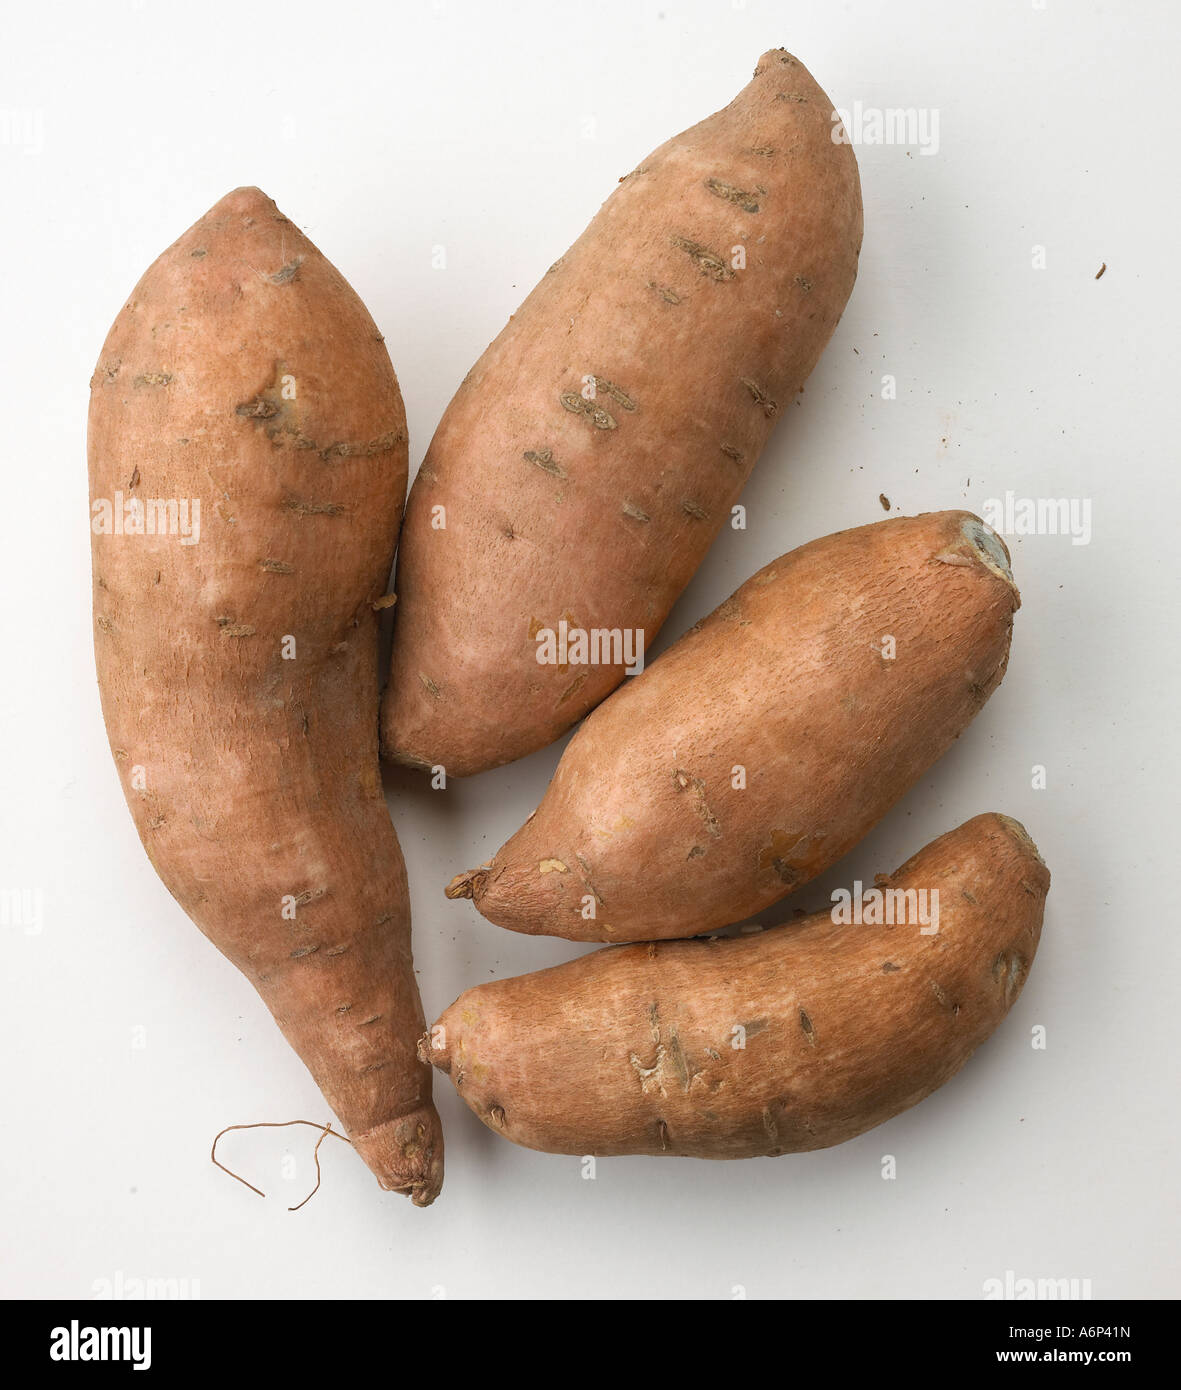 group of sweet potatoes Stock Photo